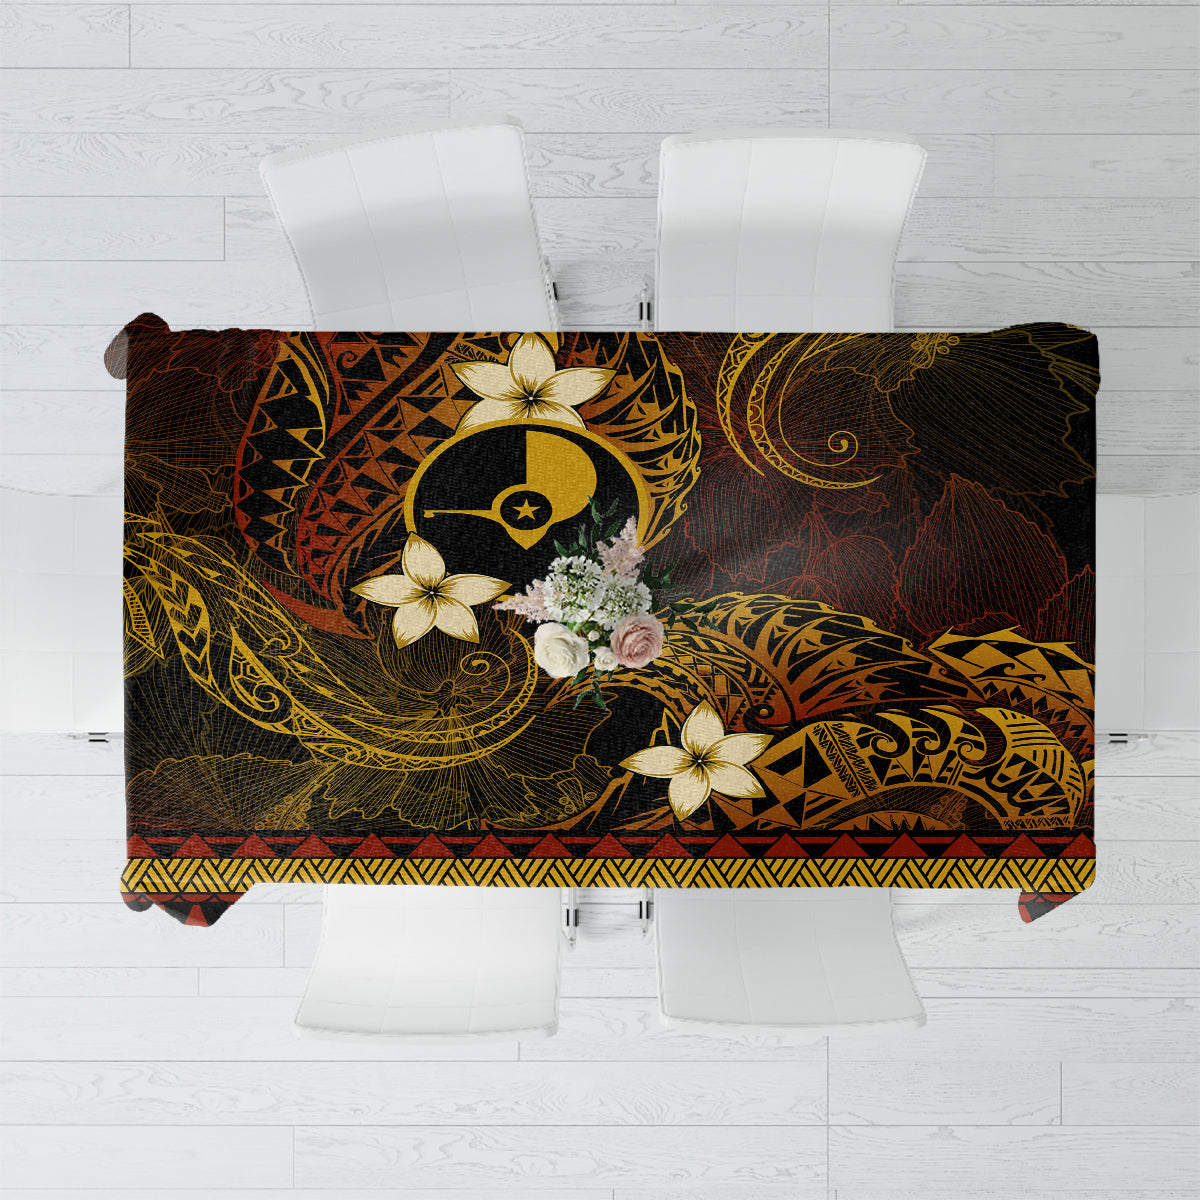 FSM Yap State Tablecloth Tribal Pattern Gold Version